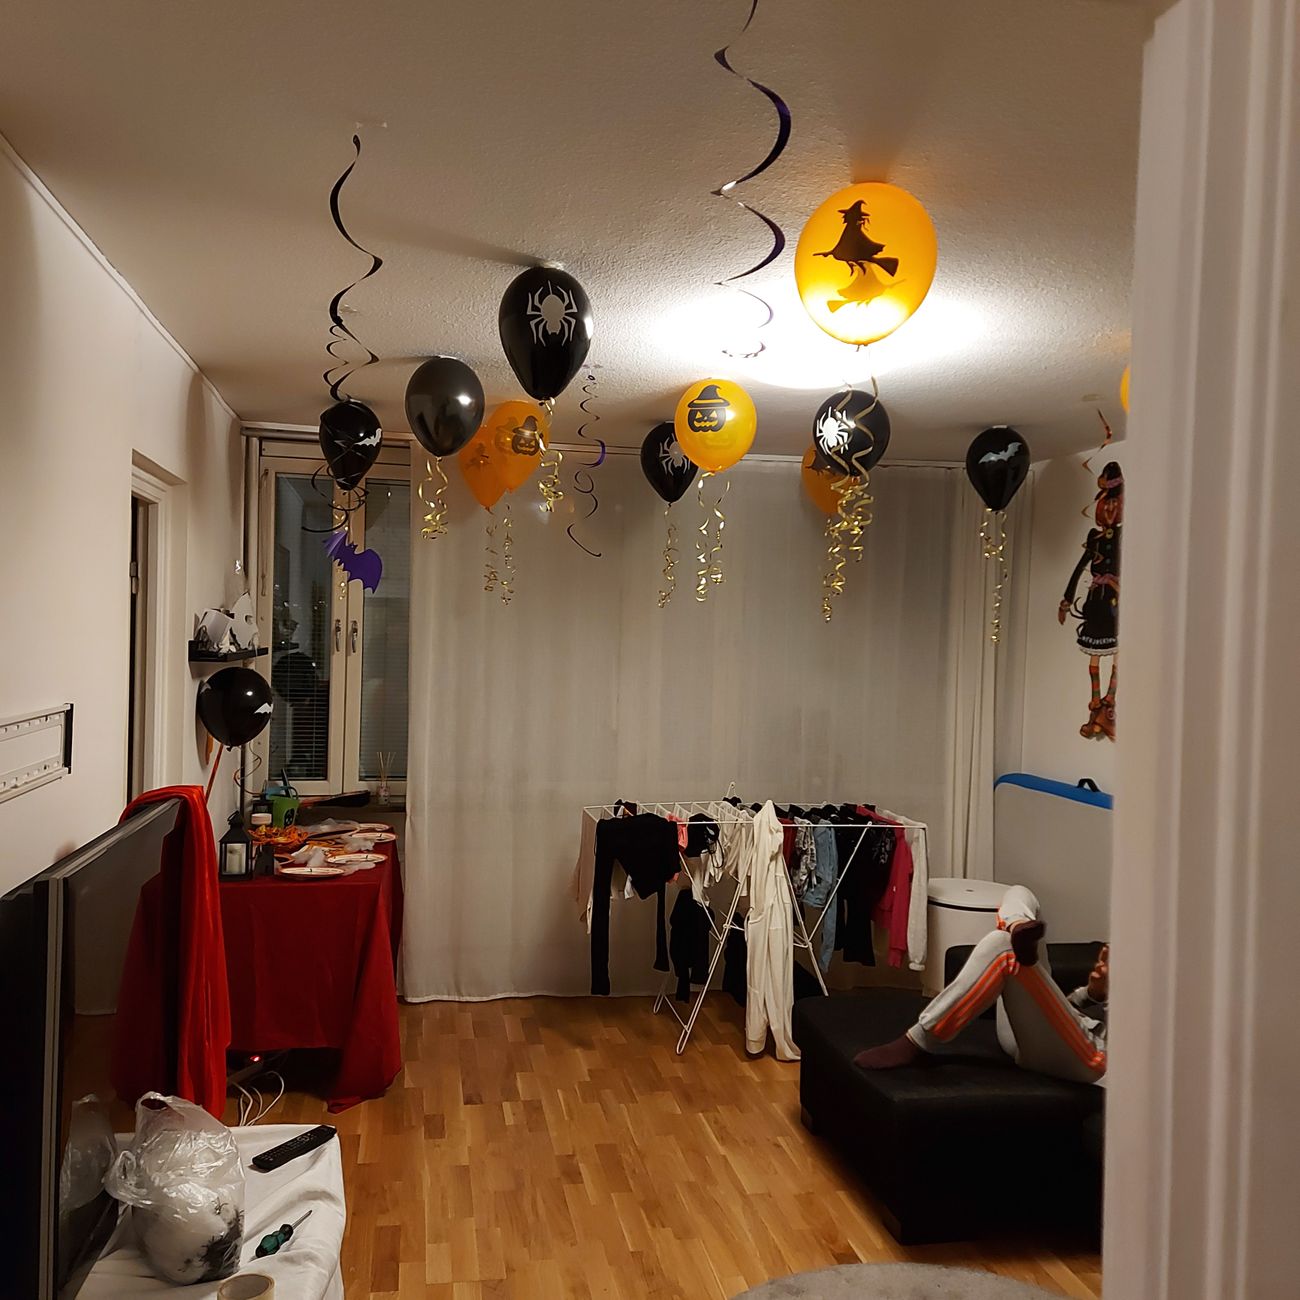 kb-ballonger-halloween-svartorange-2